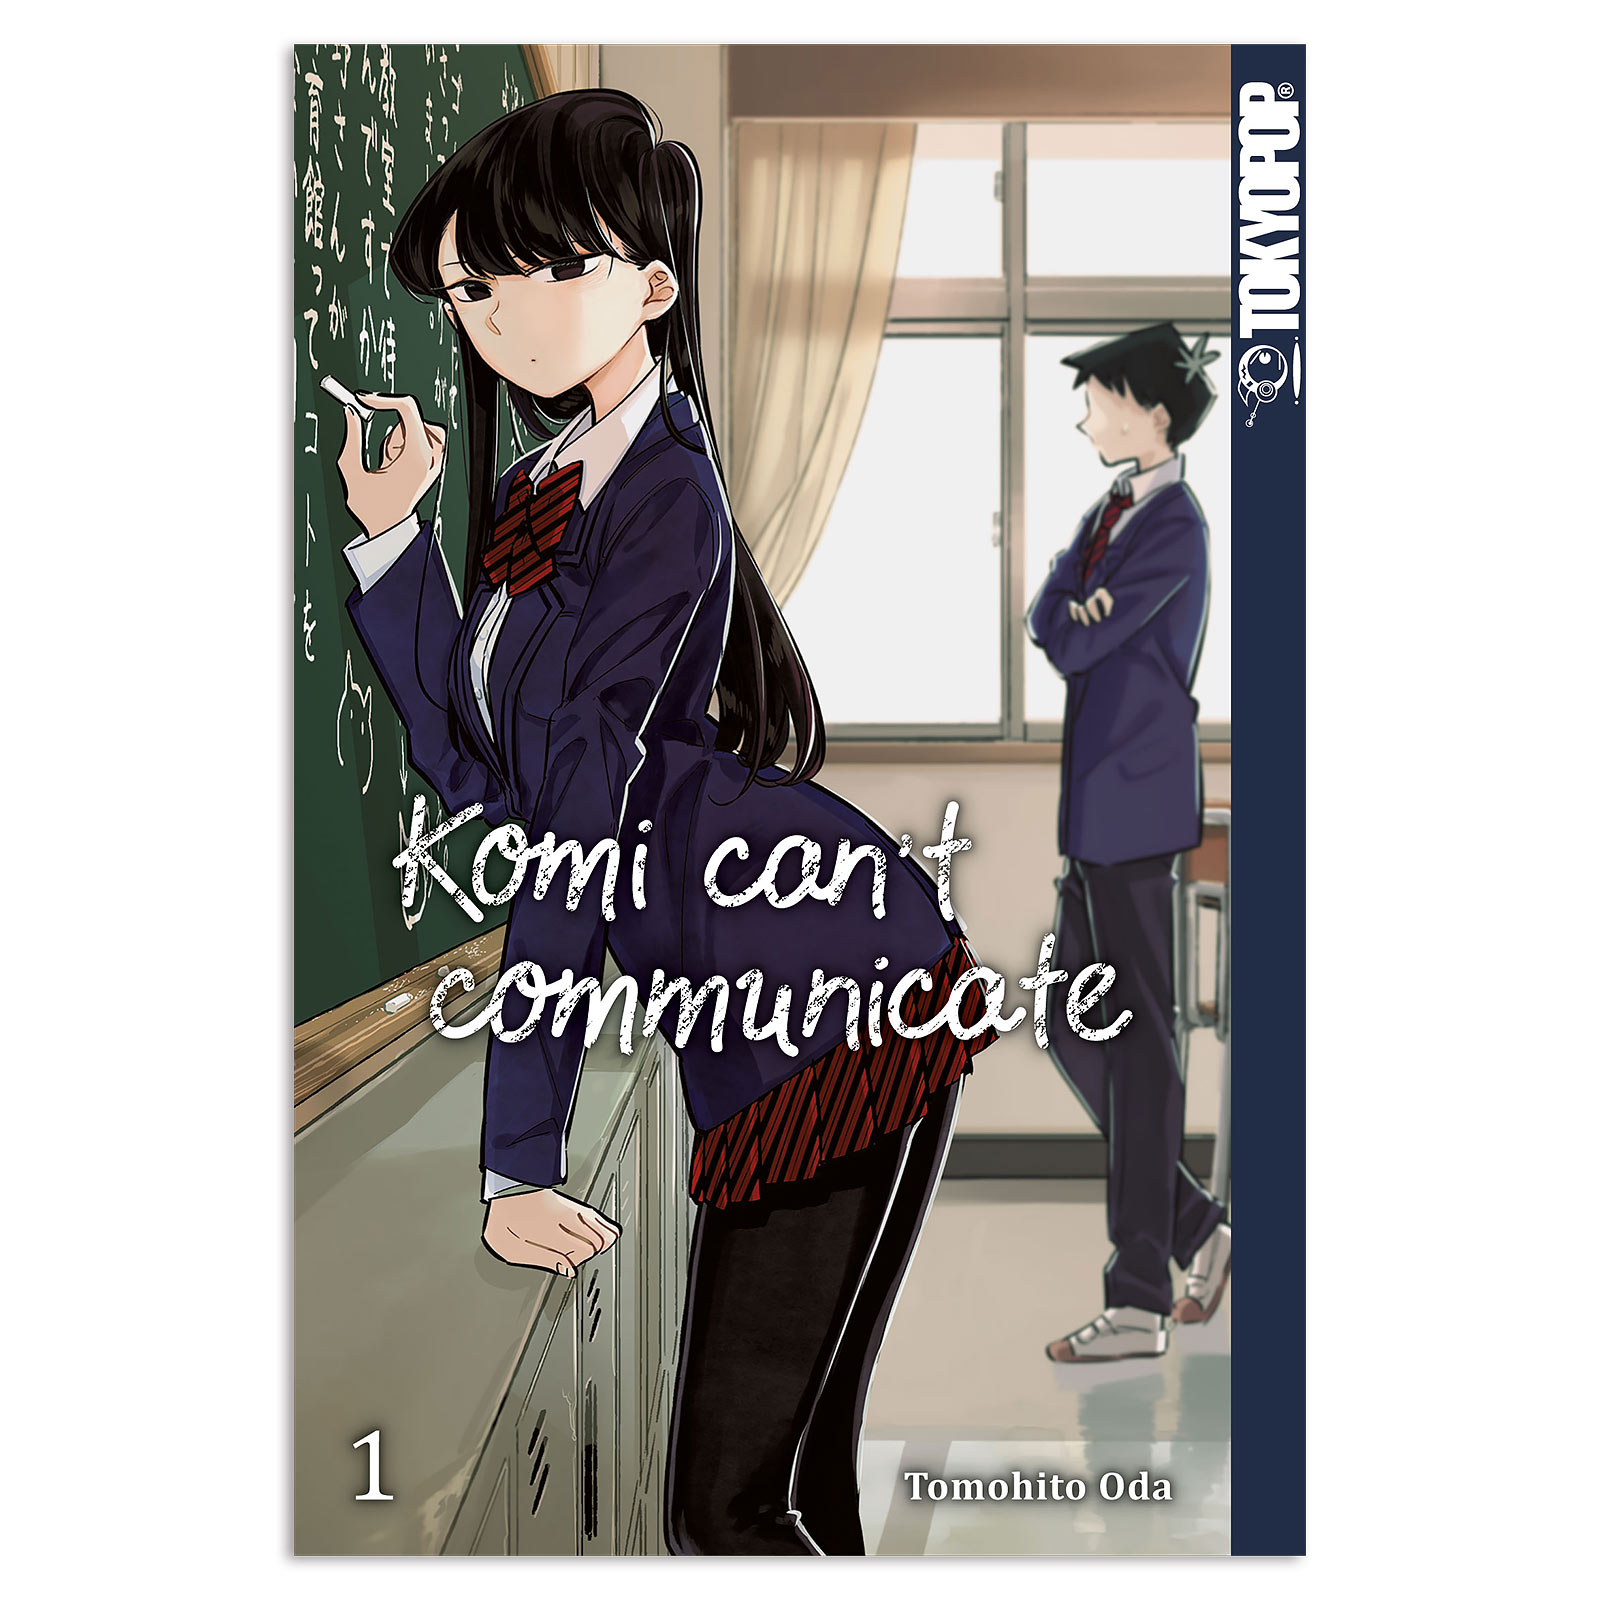 Komi can't communicate - Volume 1 Paperback